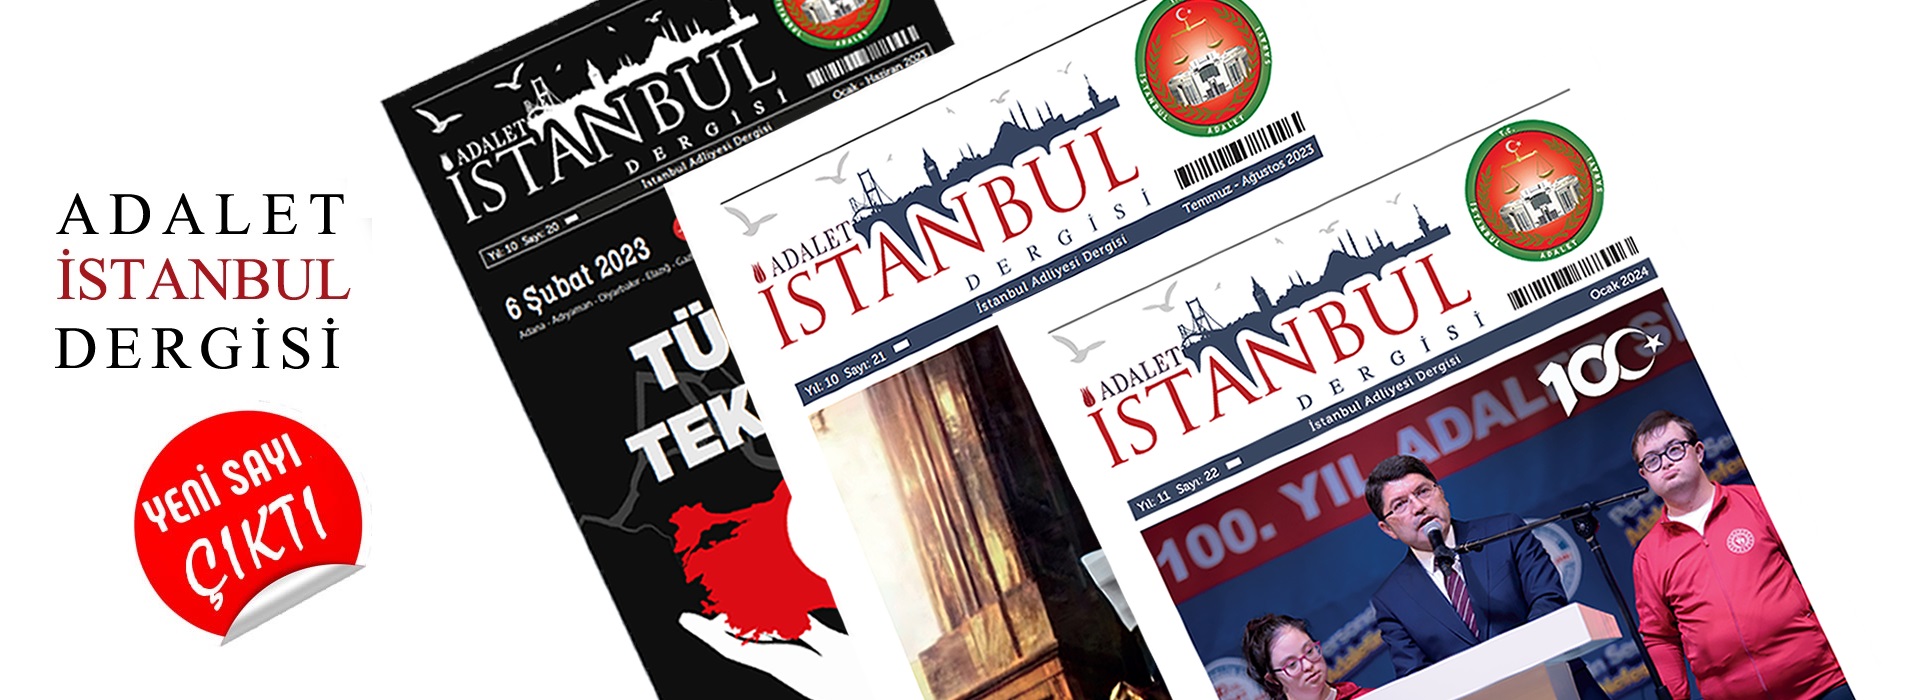 Adalet İstanbul Dergisi